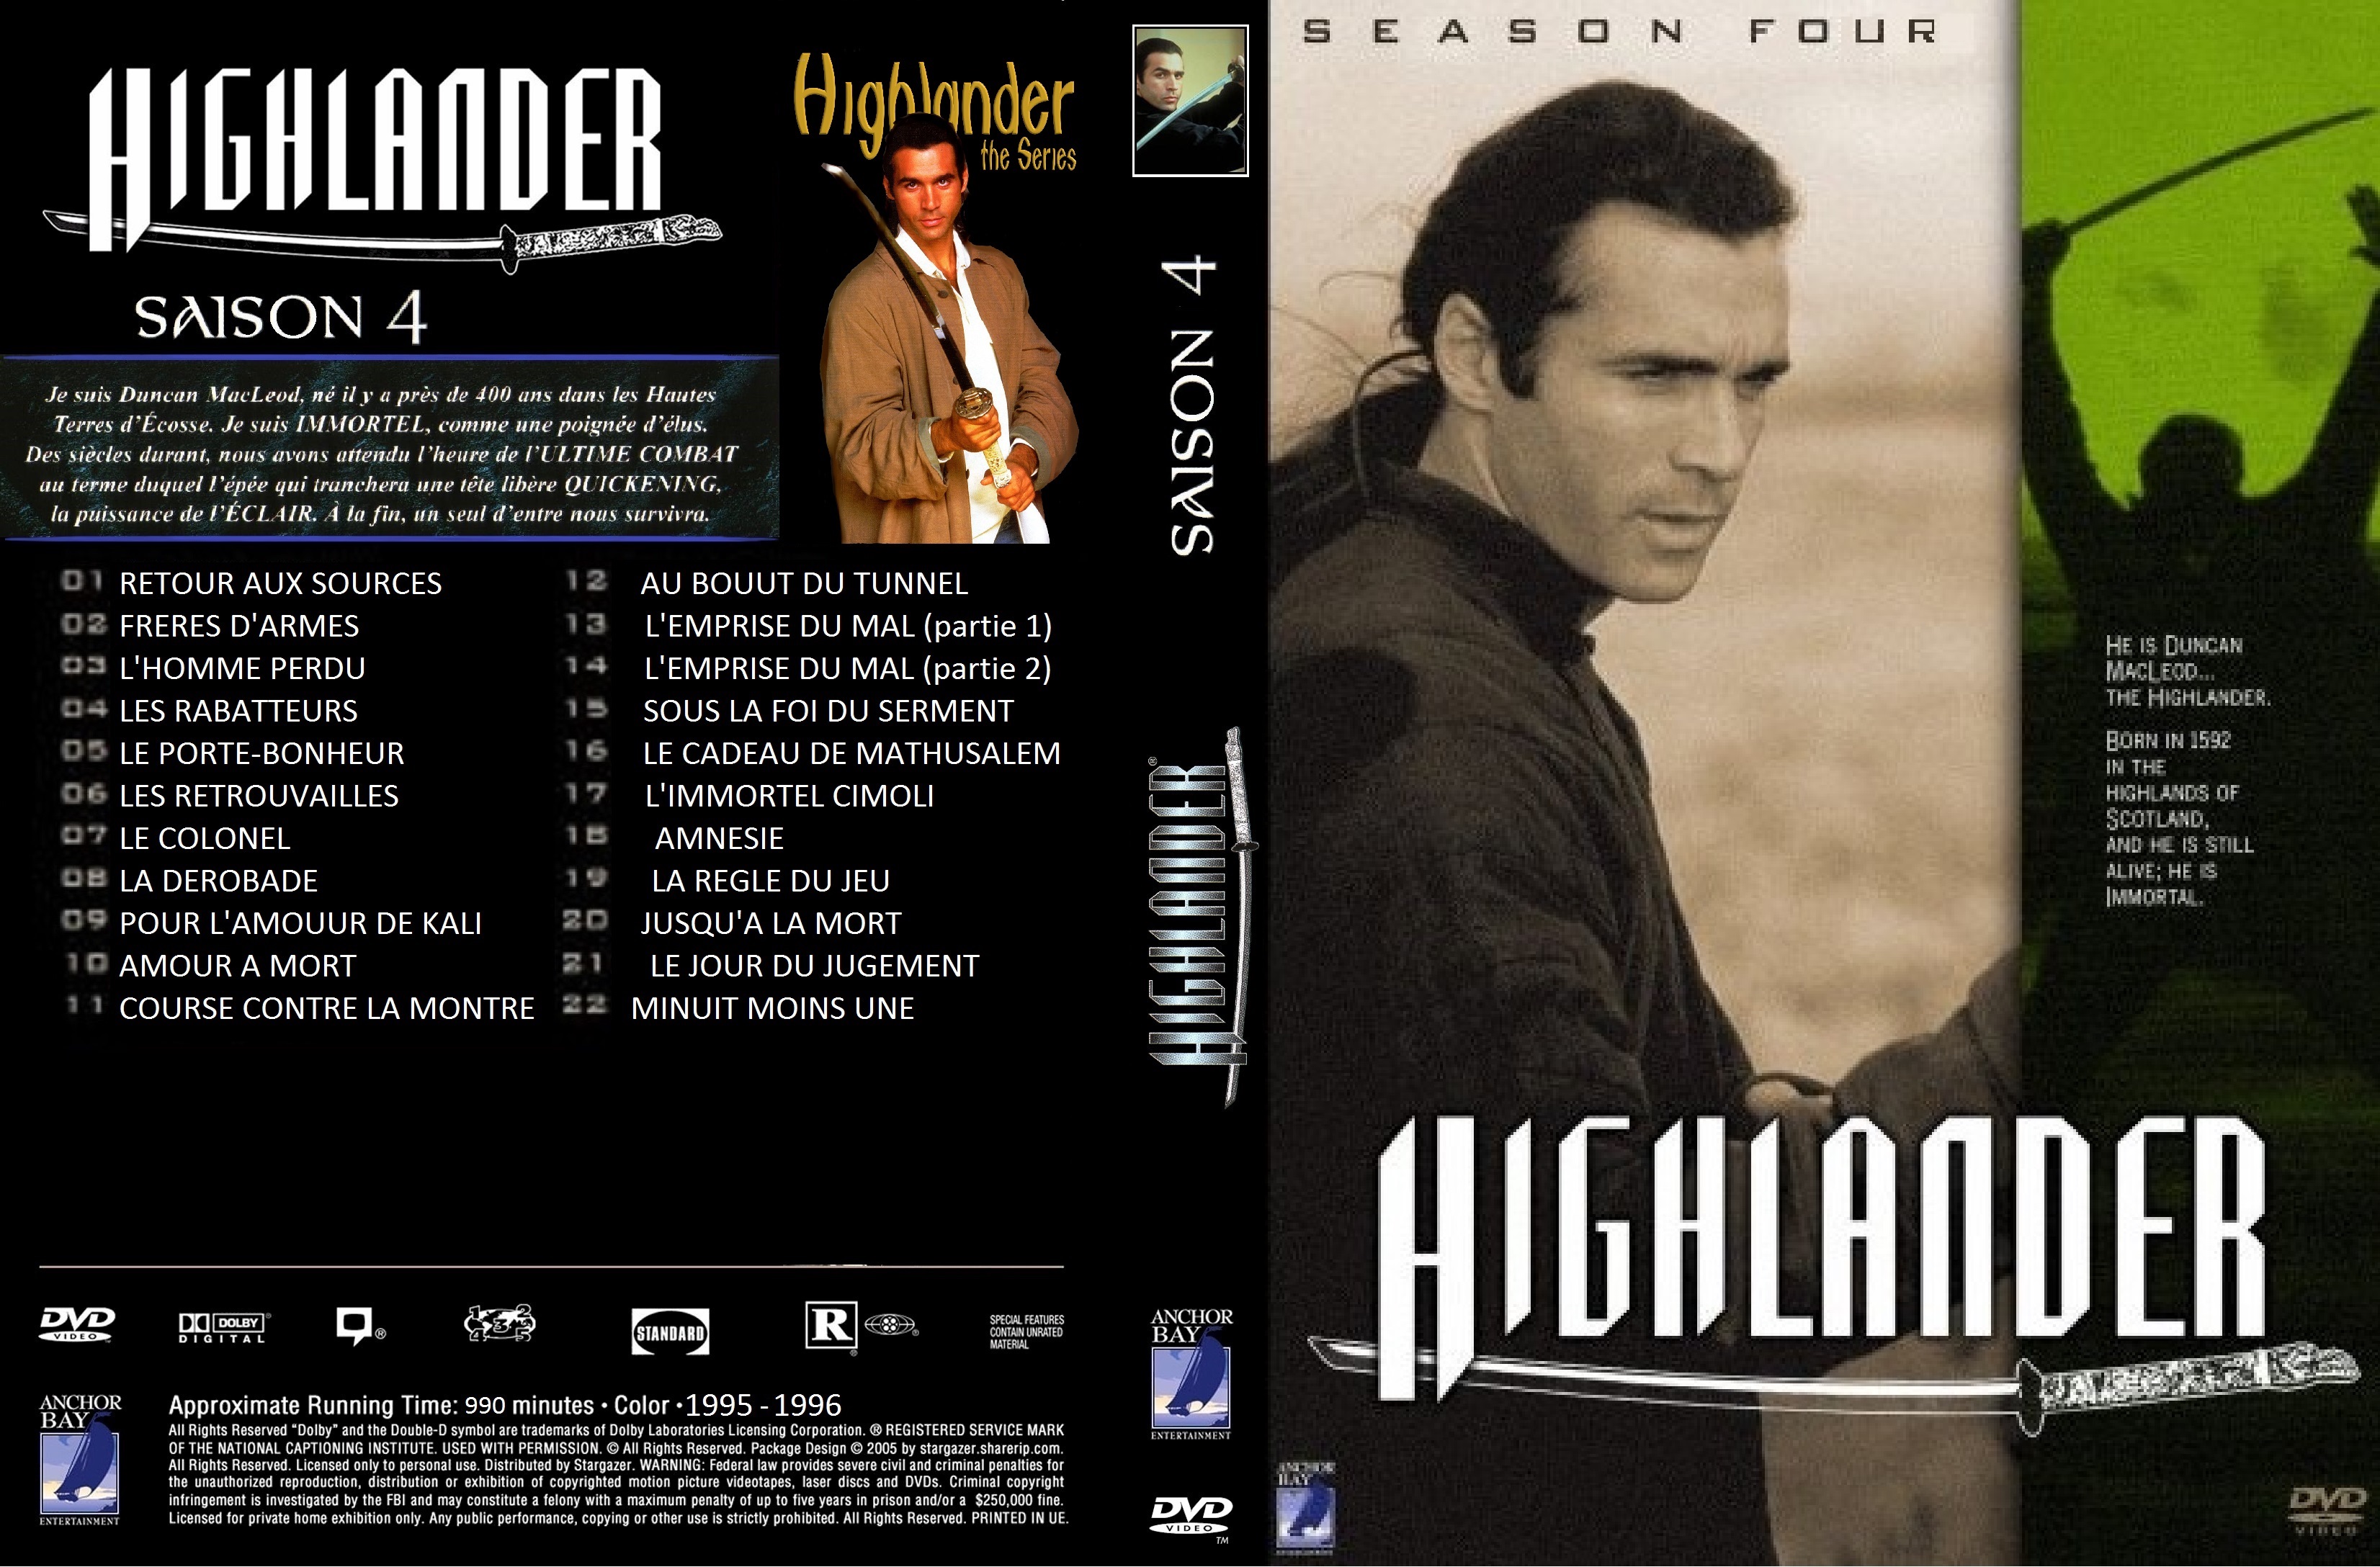 Jaquette DVD Highlander saison 4 custom 